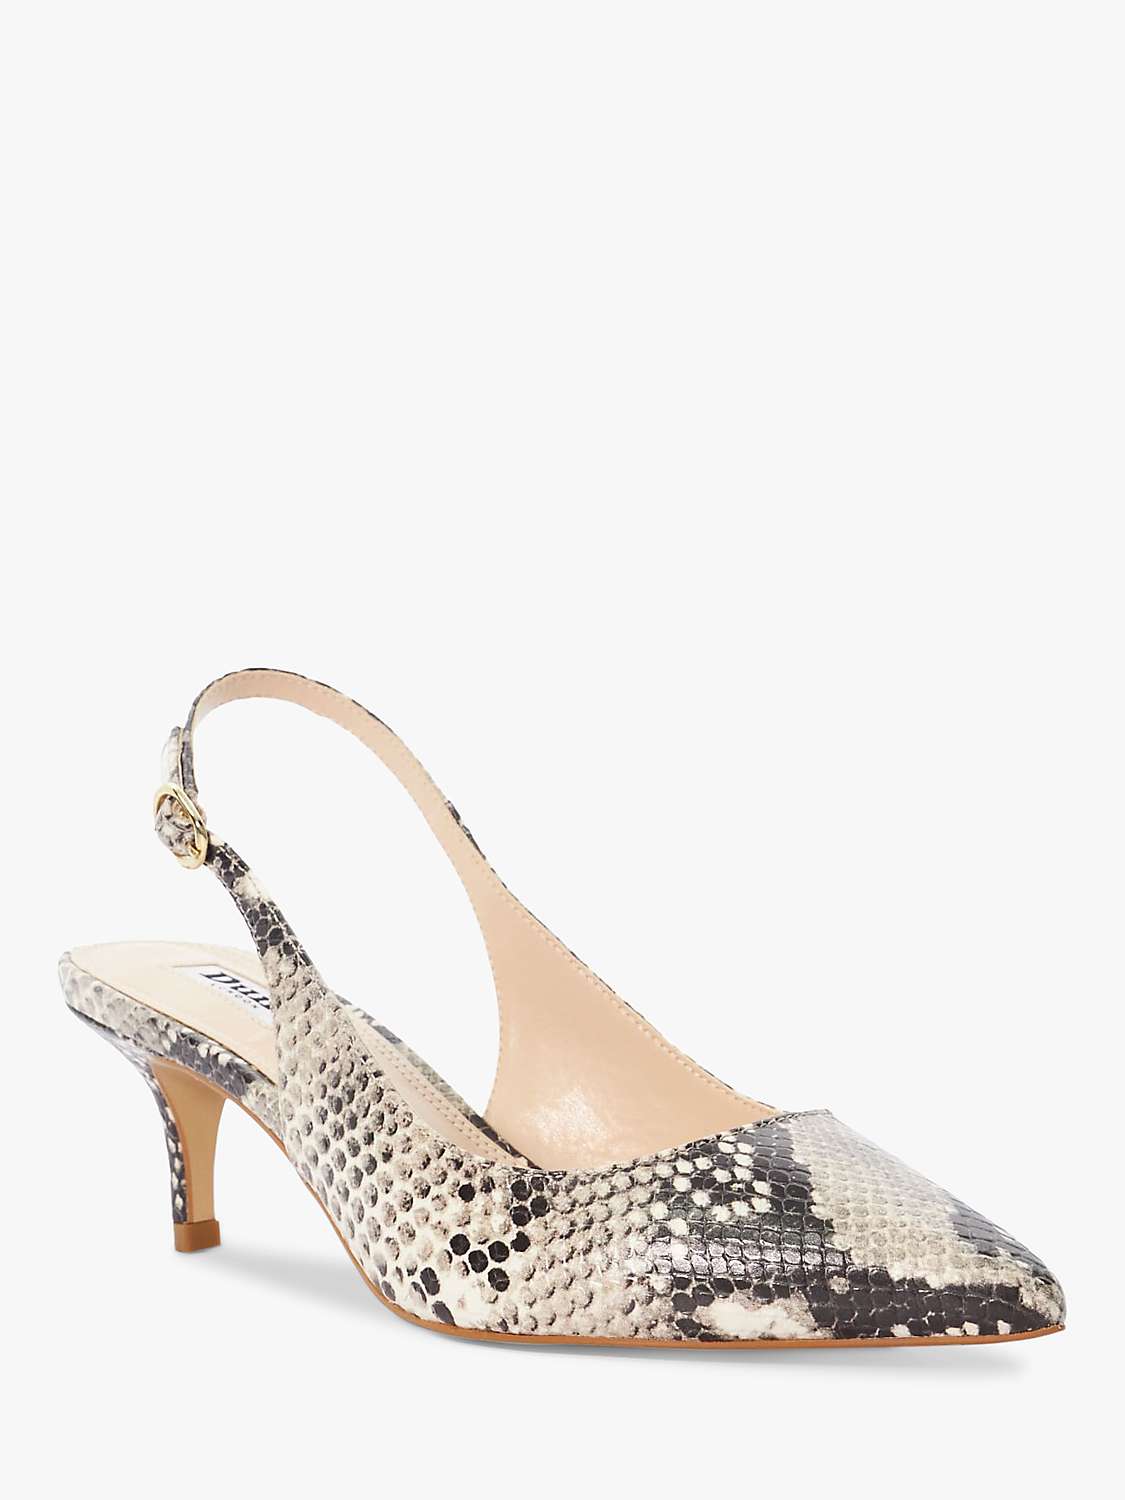 Buy Dune Celini Leather Slingback Kitten Heel Shoes, Reptile Online at johnlewis.com